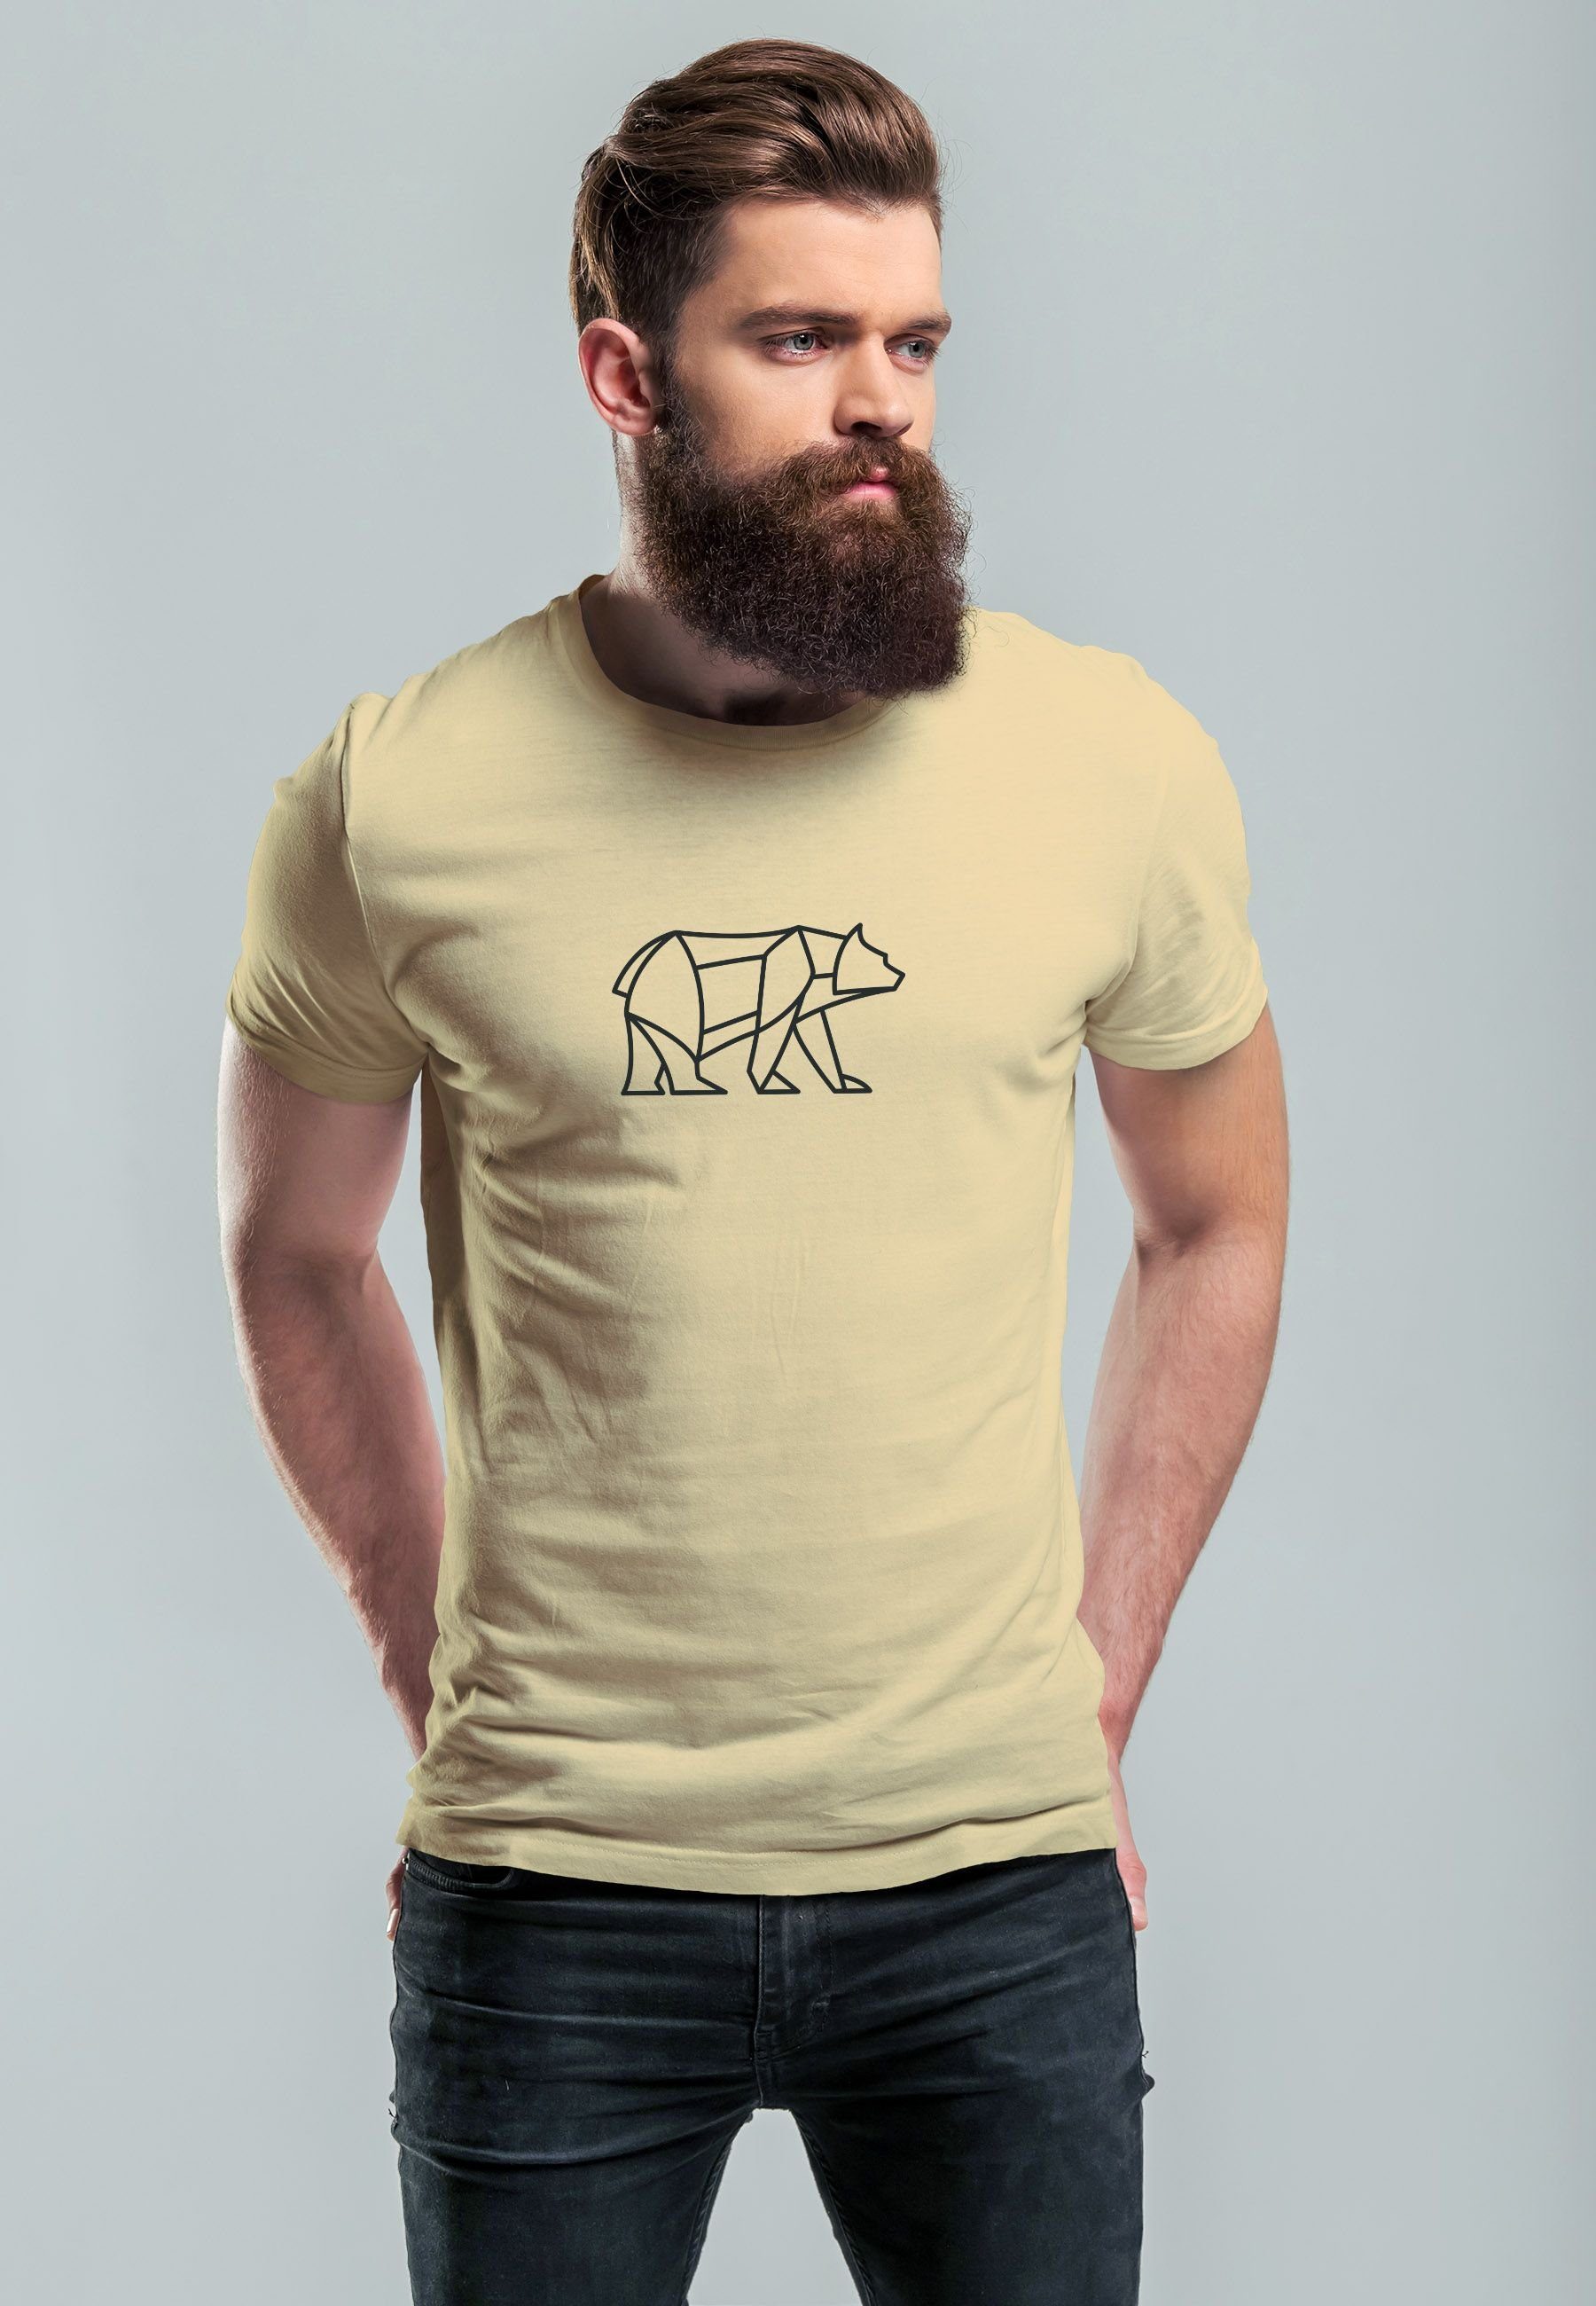 Fashion T-Shirt Polygon Herren natur Neverless Outdoor Bär Print 2 Polygon Bear Print-Shirt Design mit Tiermotiv Print